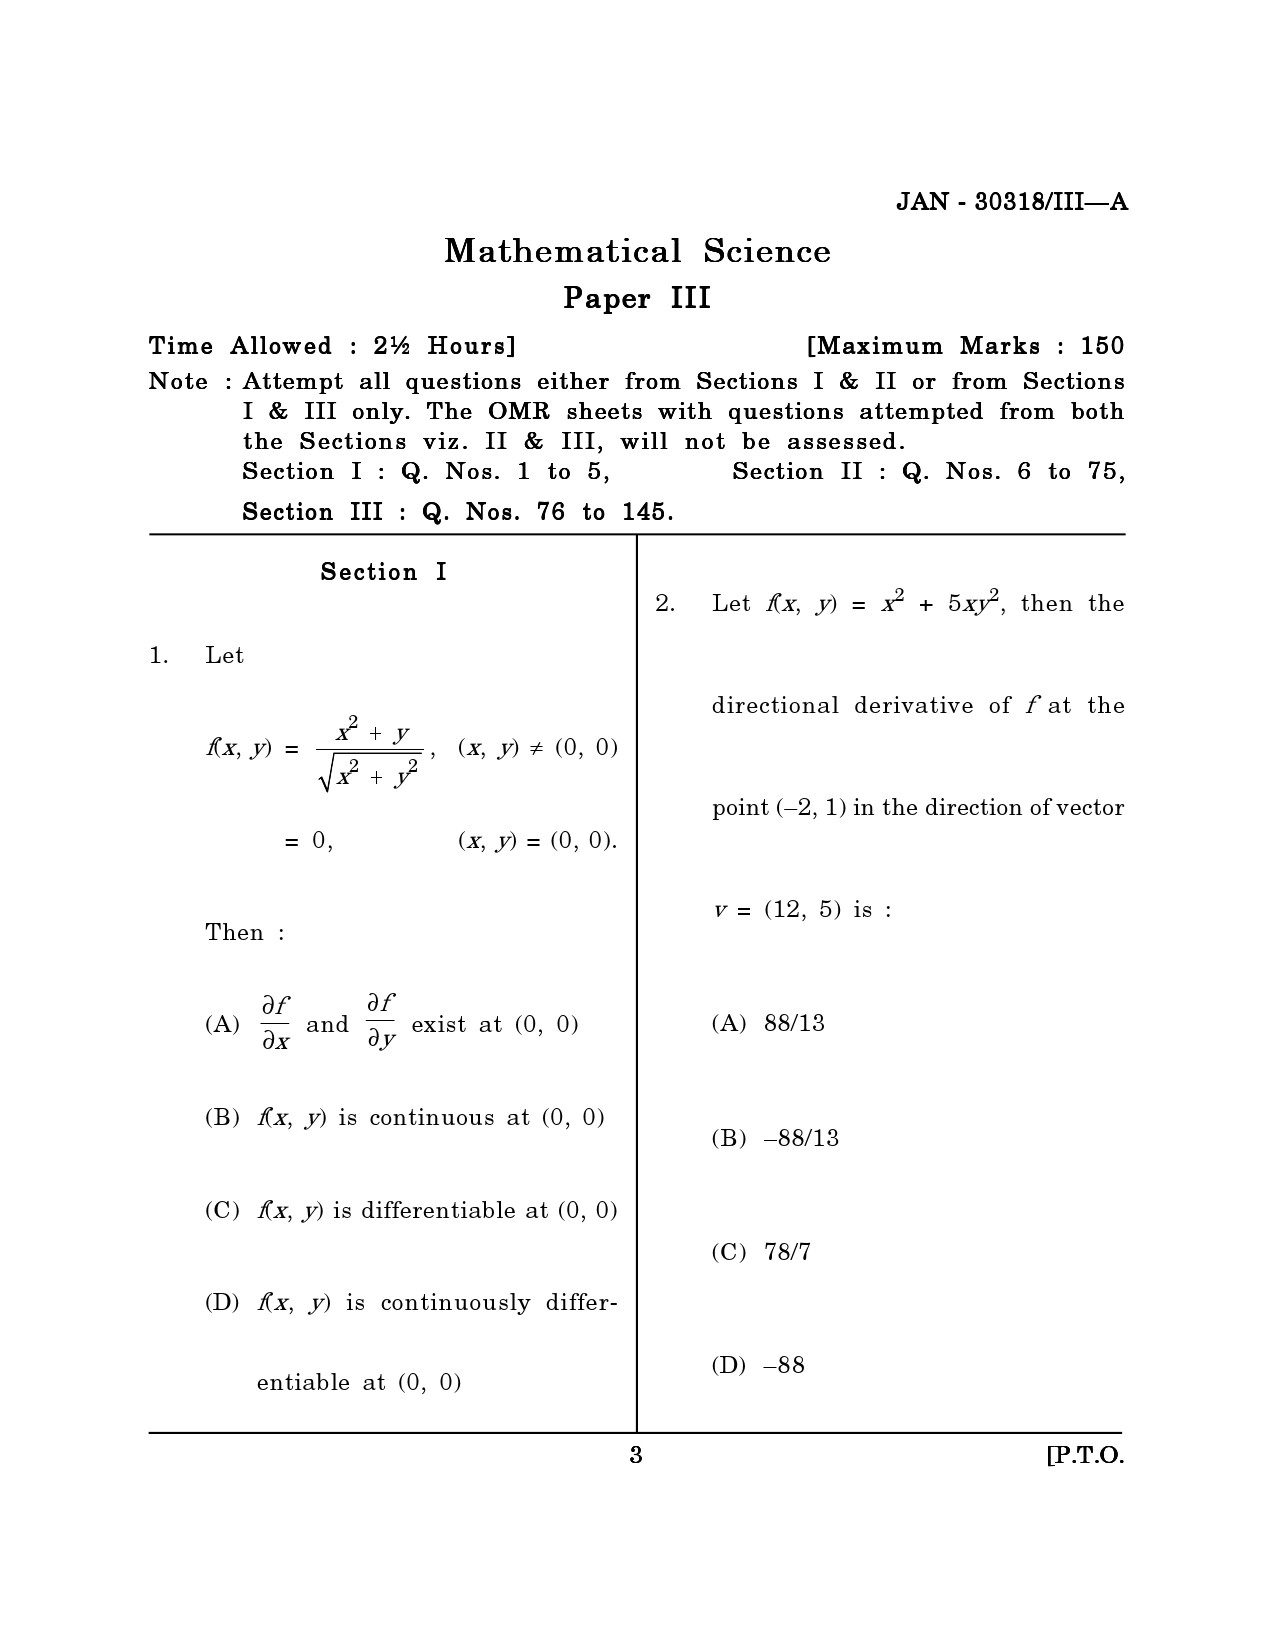 Maharashtra SET Mathematical Sciences Question Paper III January 2018 2